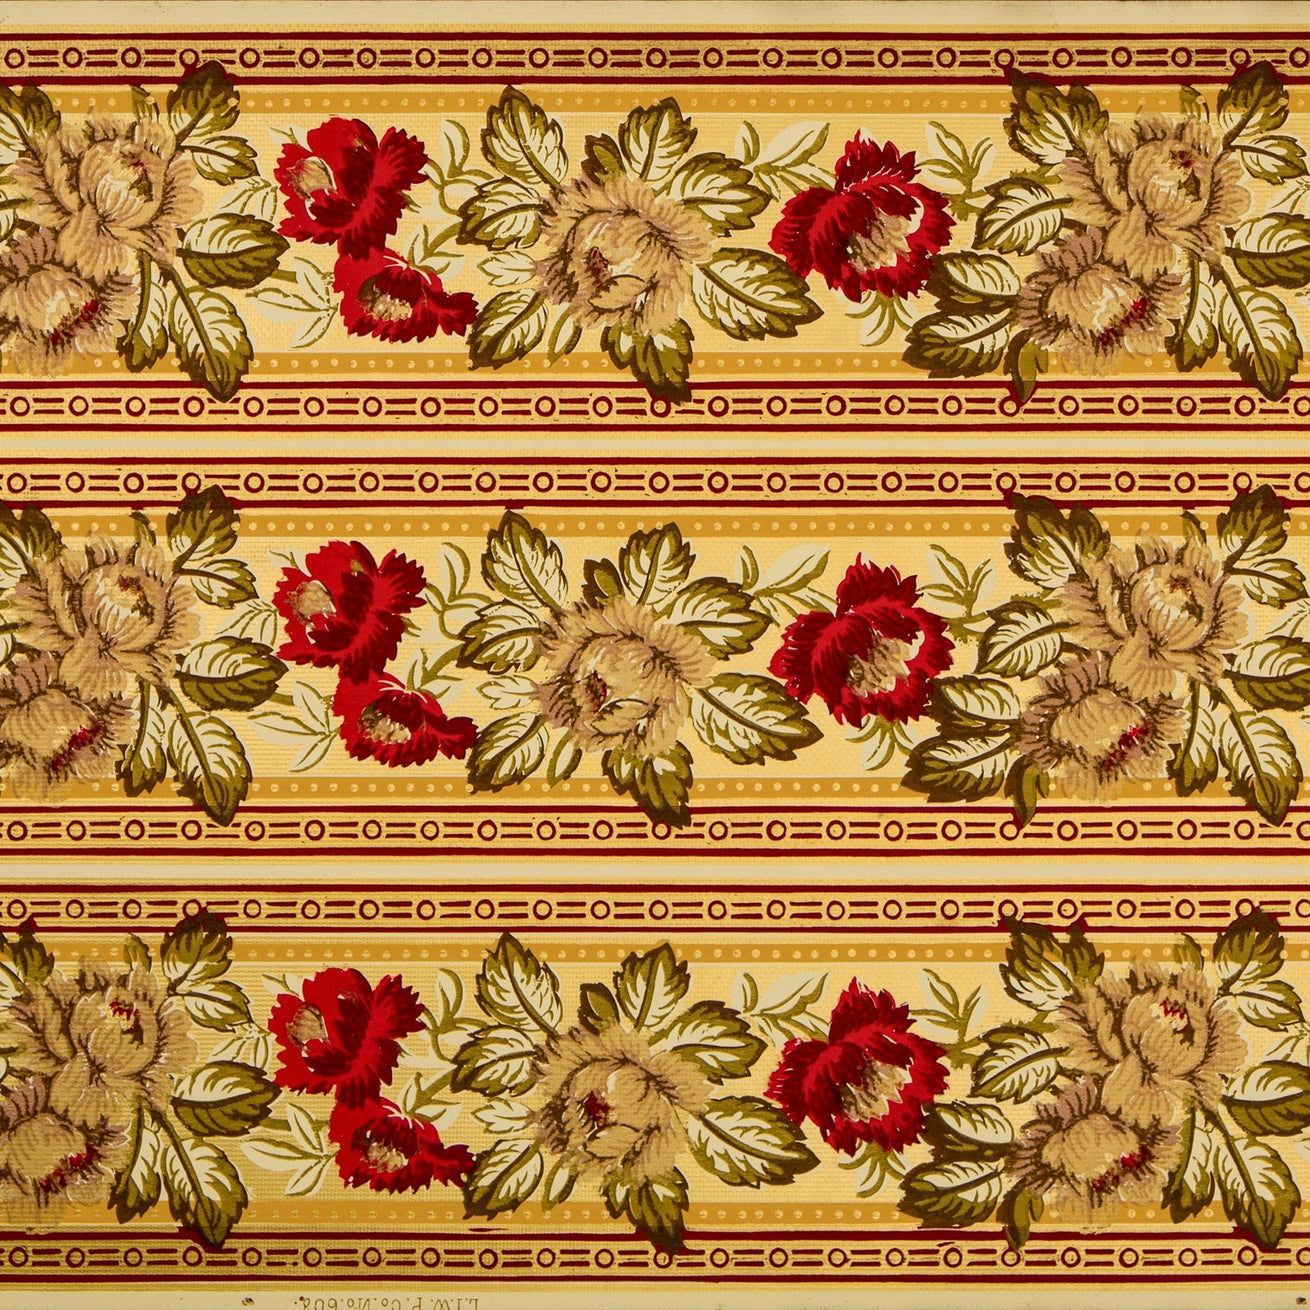 3-Band 6-1/4" Gilt Floral Border - Antique Wallpaper Roll